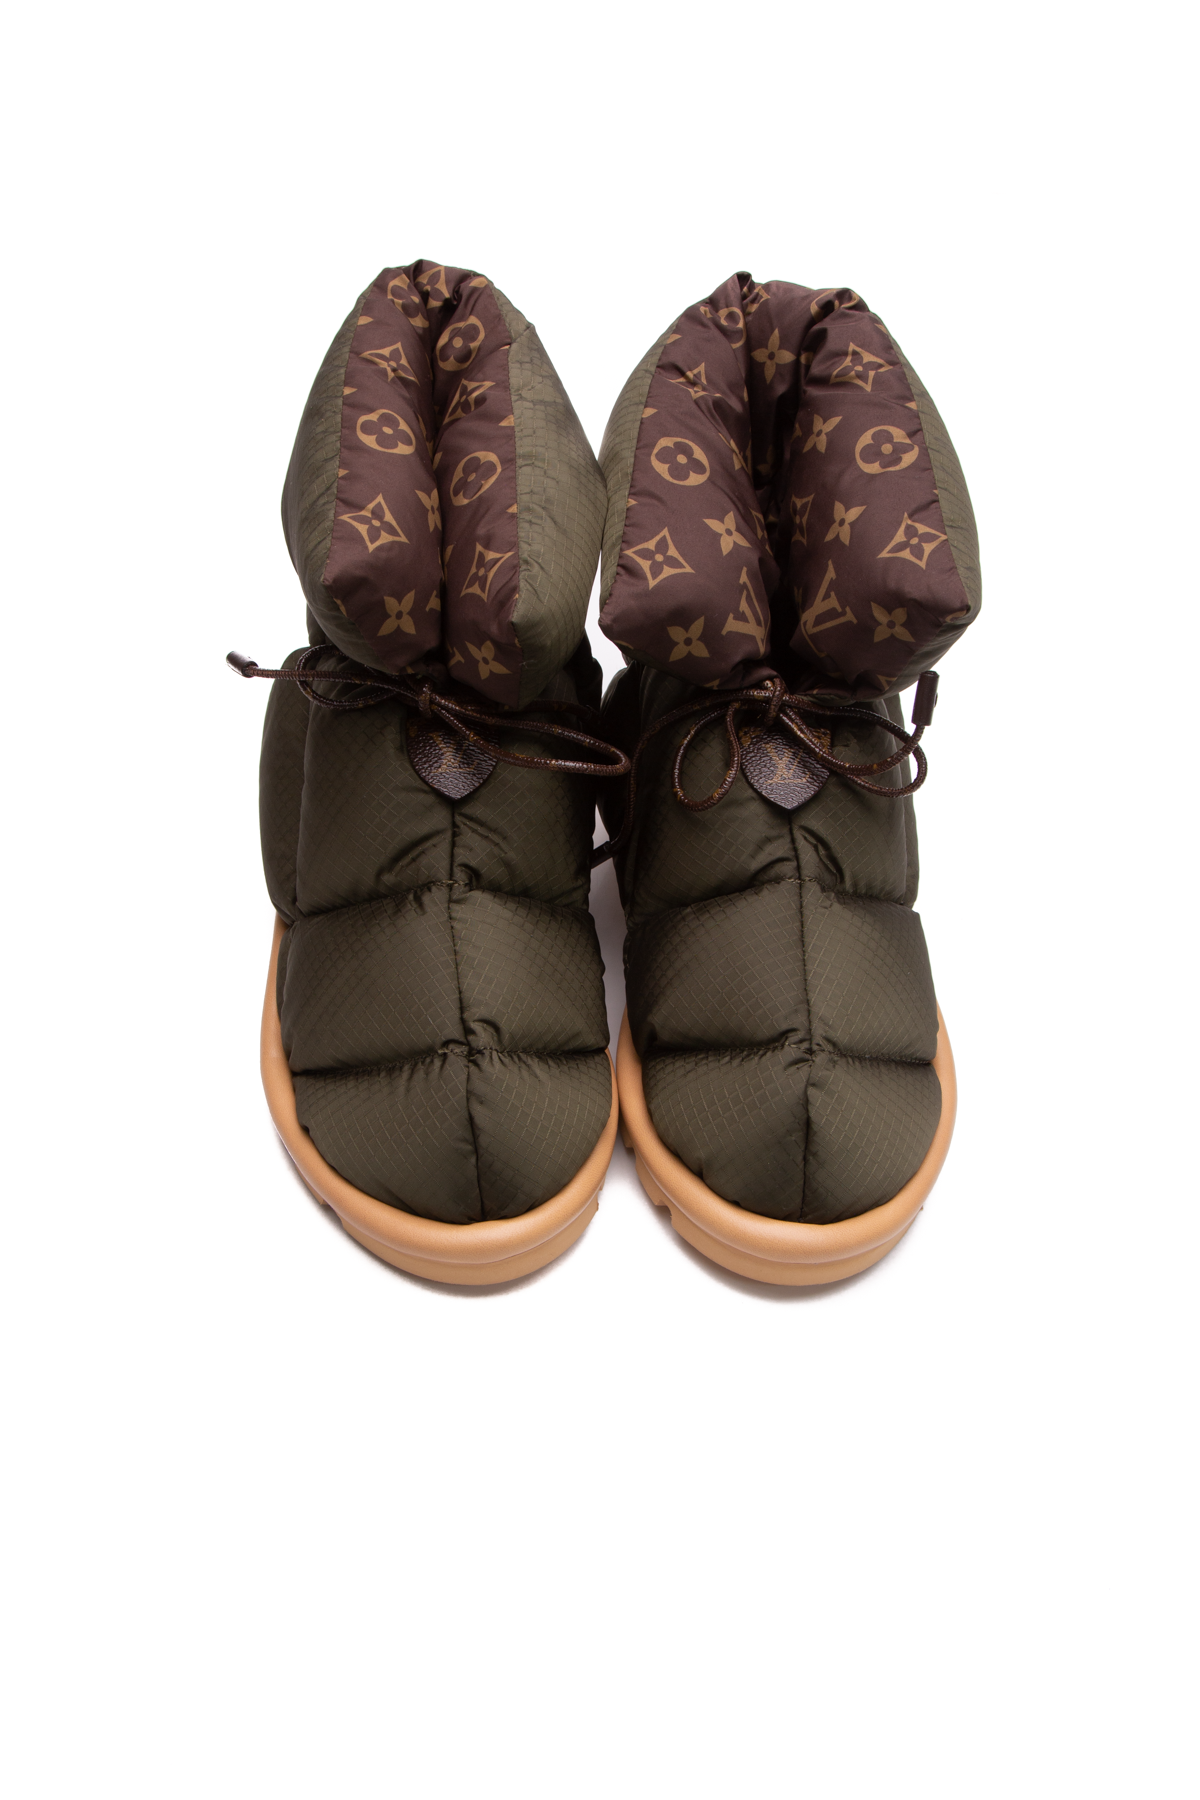 Louis Vuitton - Authenticated Pillow Ankle Boots - Cloth Khaki Plain for Women, Very Good Condition